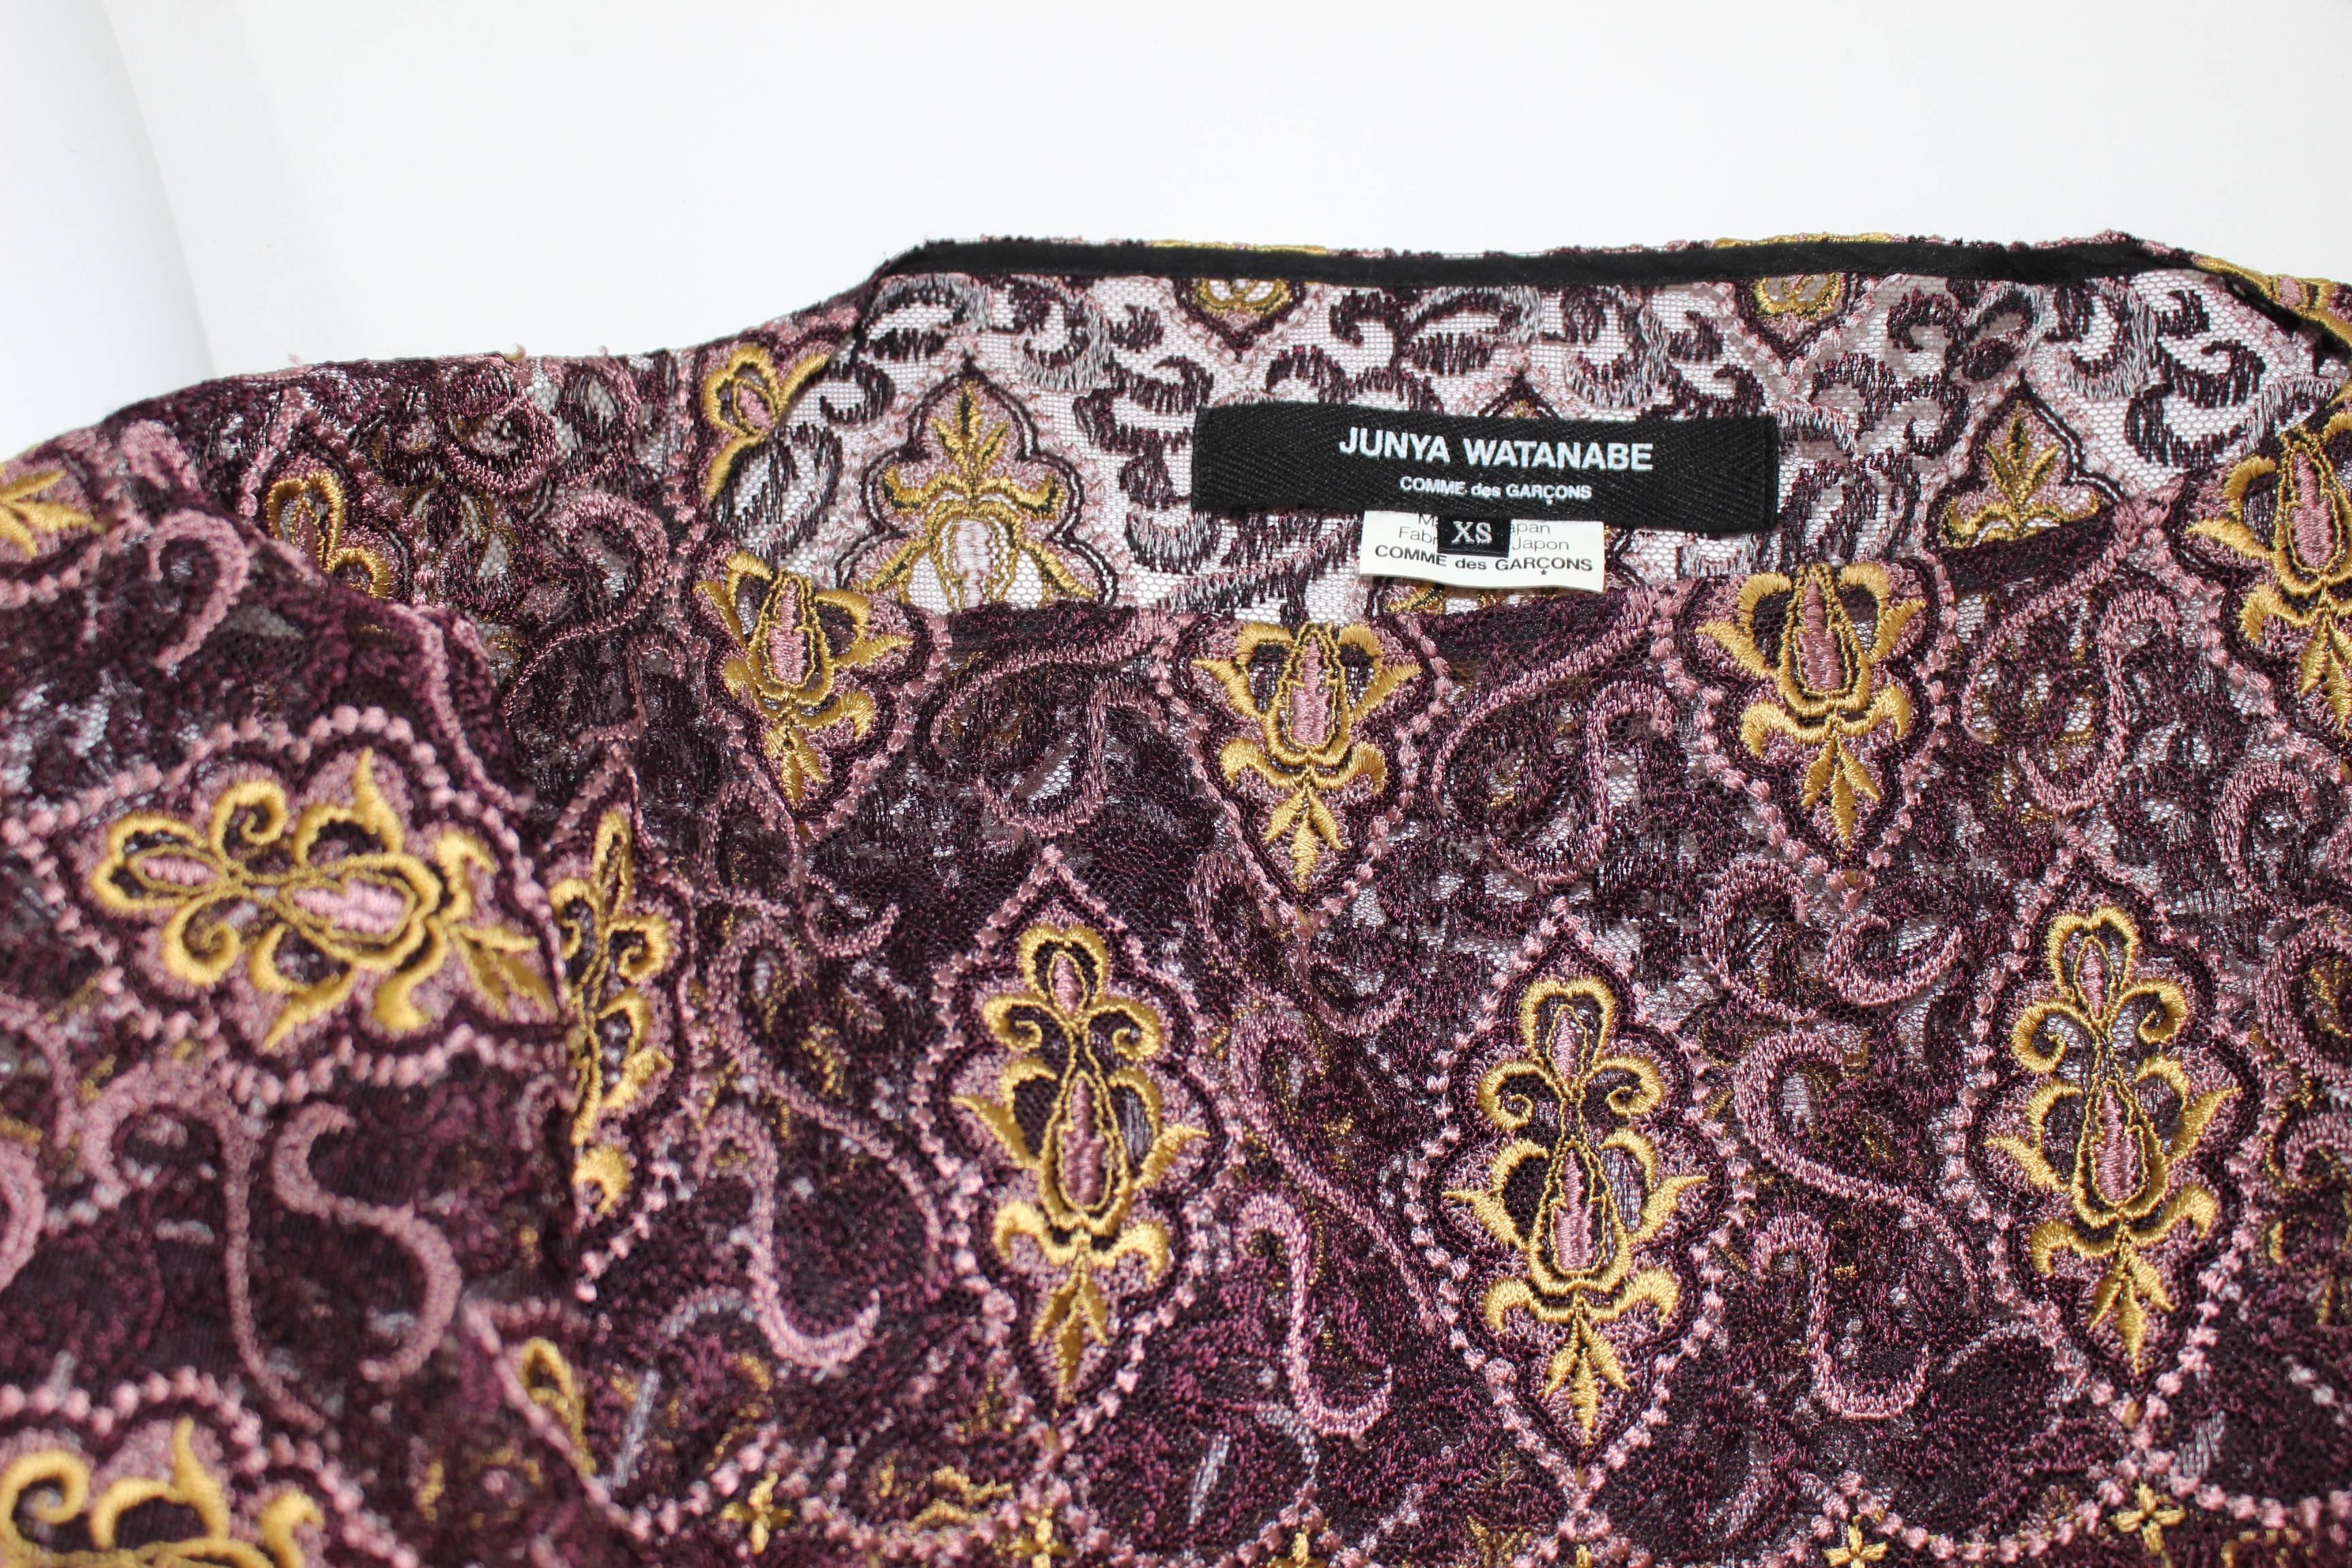  Junya Watanabe Comme des Garcons Burgundy Purple Gold Lace Kimono Sleeve Dress For Sale 2